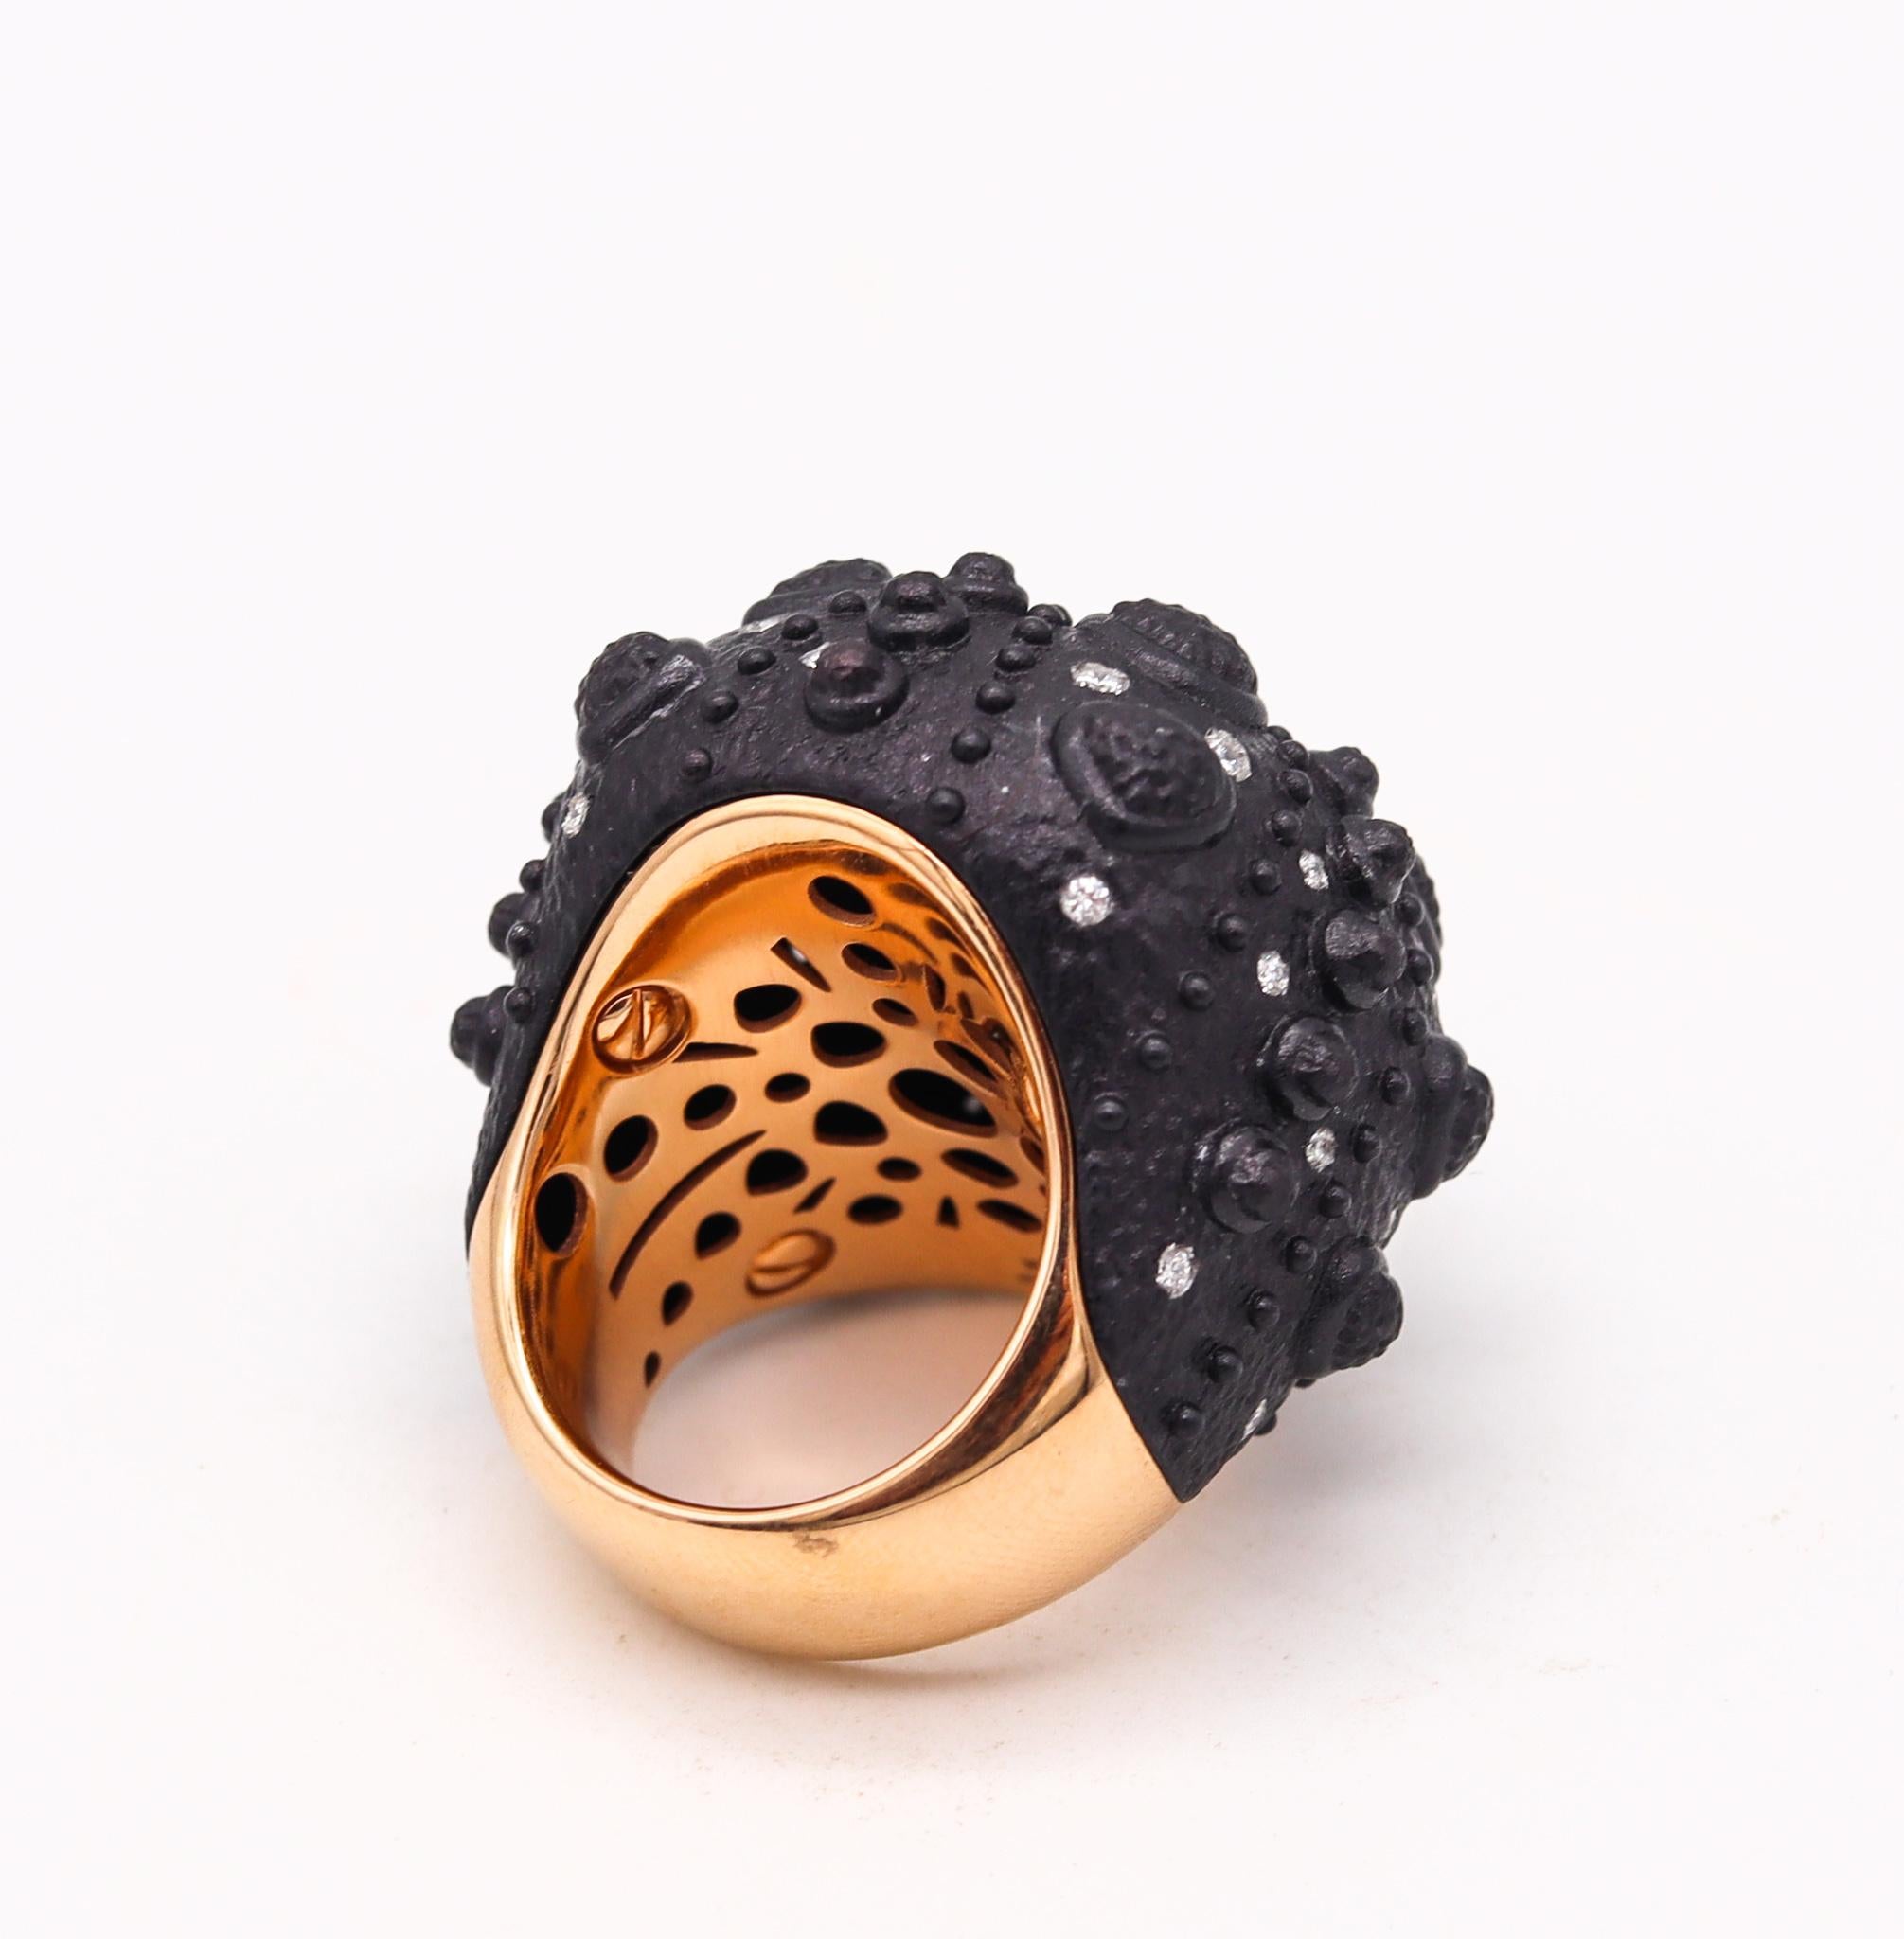 Cabochon Marina B Milan Prototype Urchin Ring in 18Kt Gold 5.64 Cts Diamonds & Moonstone